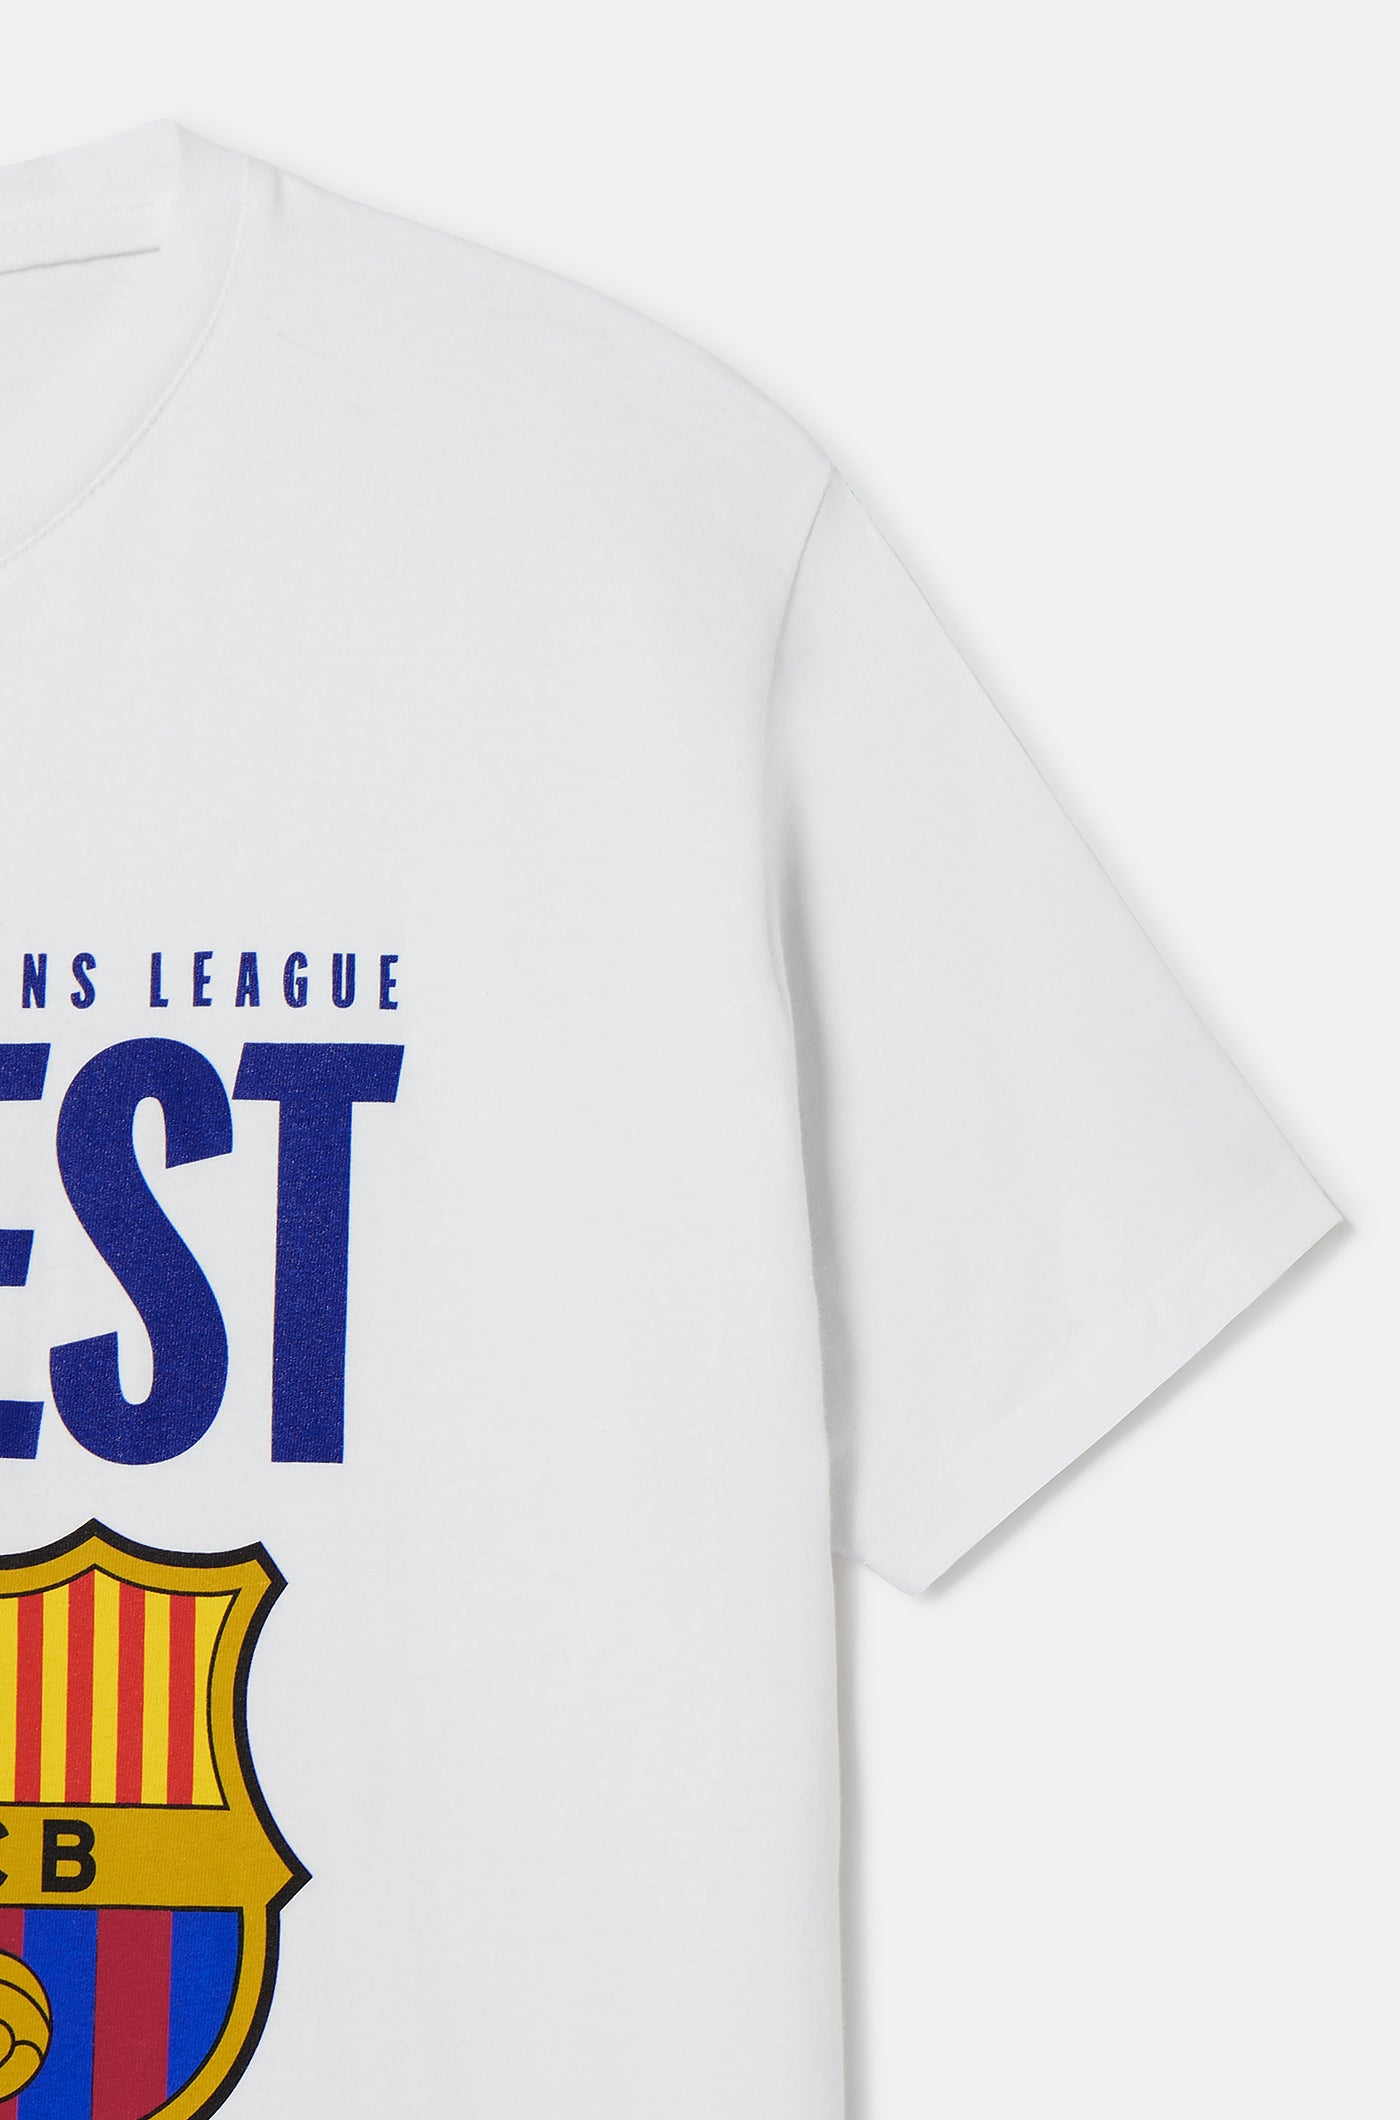 Camiseta Barça UEFA Champions League